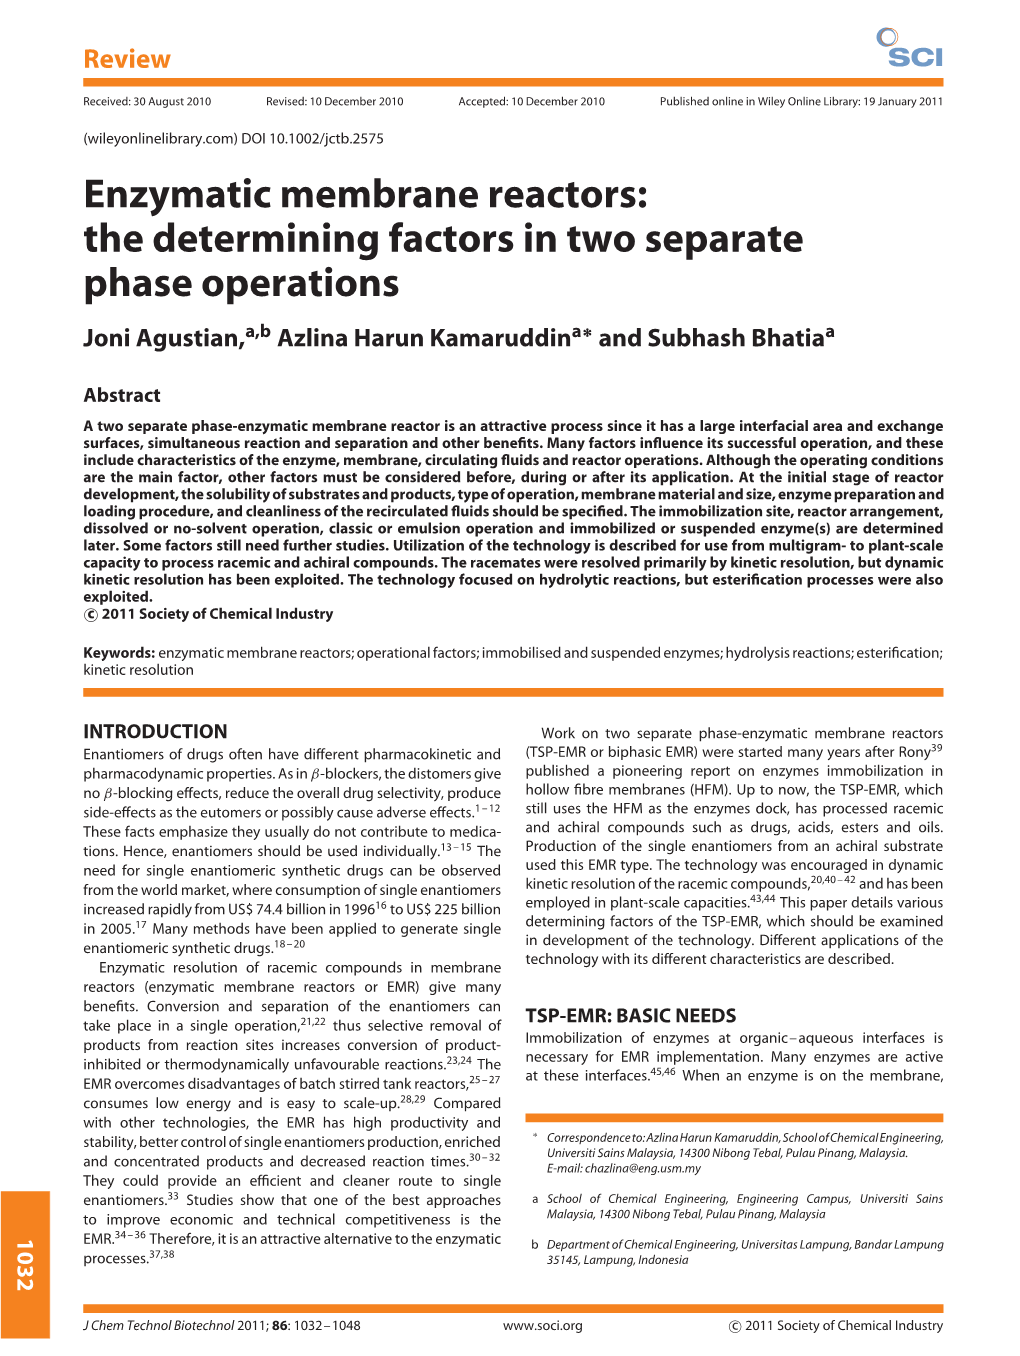 Enzymatic Membrane Reactors: the Determining Factors in Two Separate